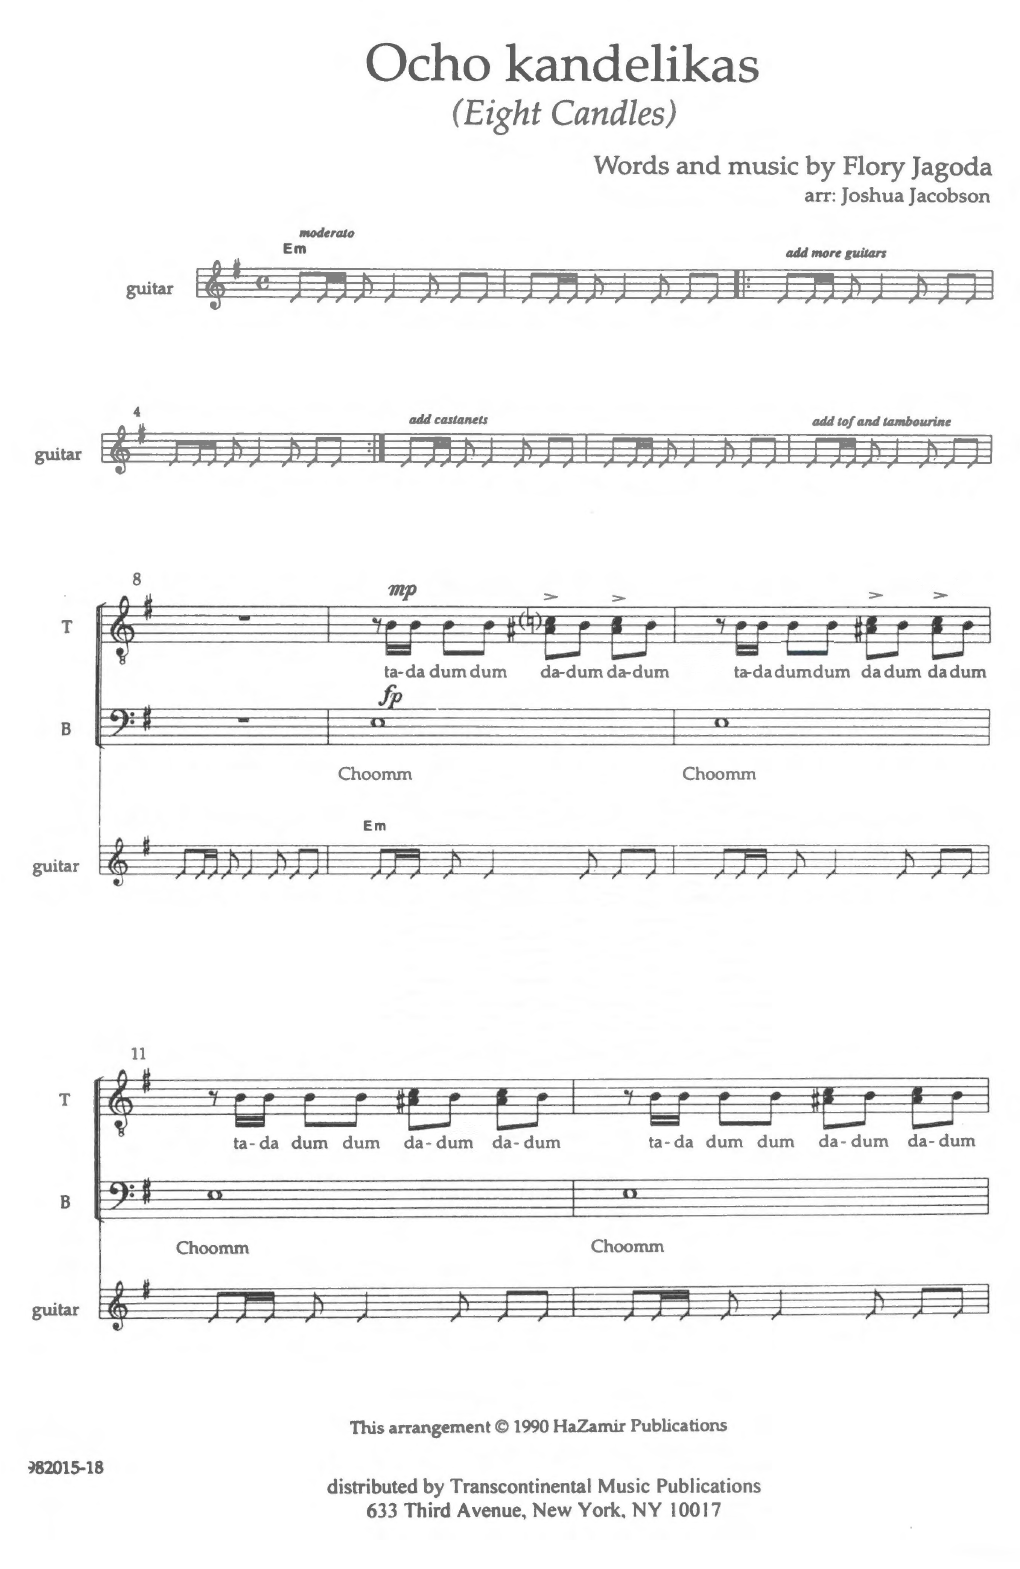 Joshua Jacobson Ocho Kandelikas (8 Candles) Sheet Music Notes & Chords for SATB - Download or Print PDF